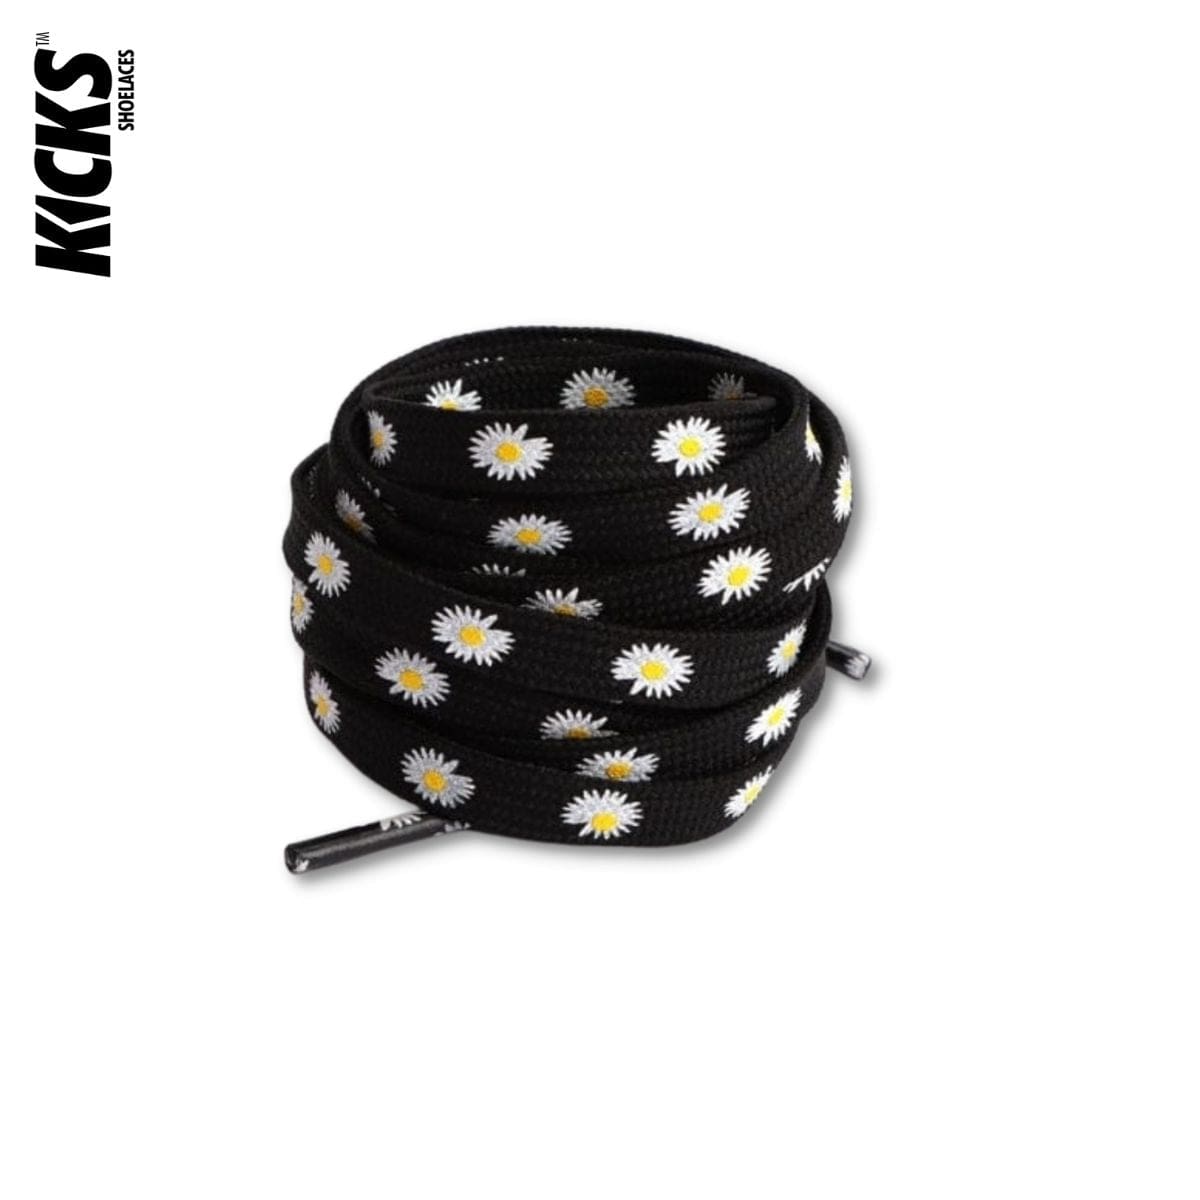 Daisy Print Shoelaces - Kicks Shoelaces